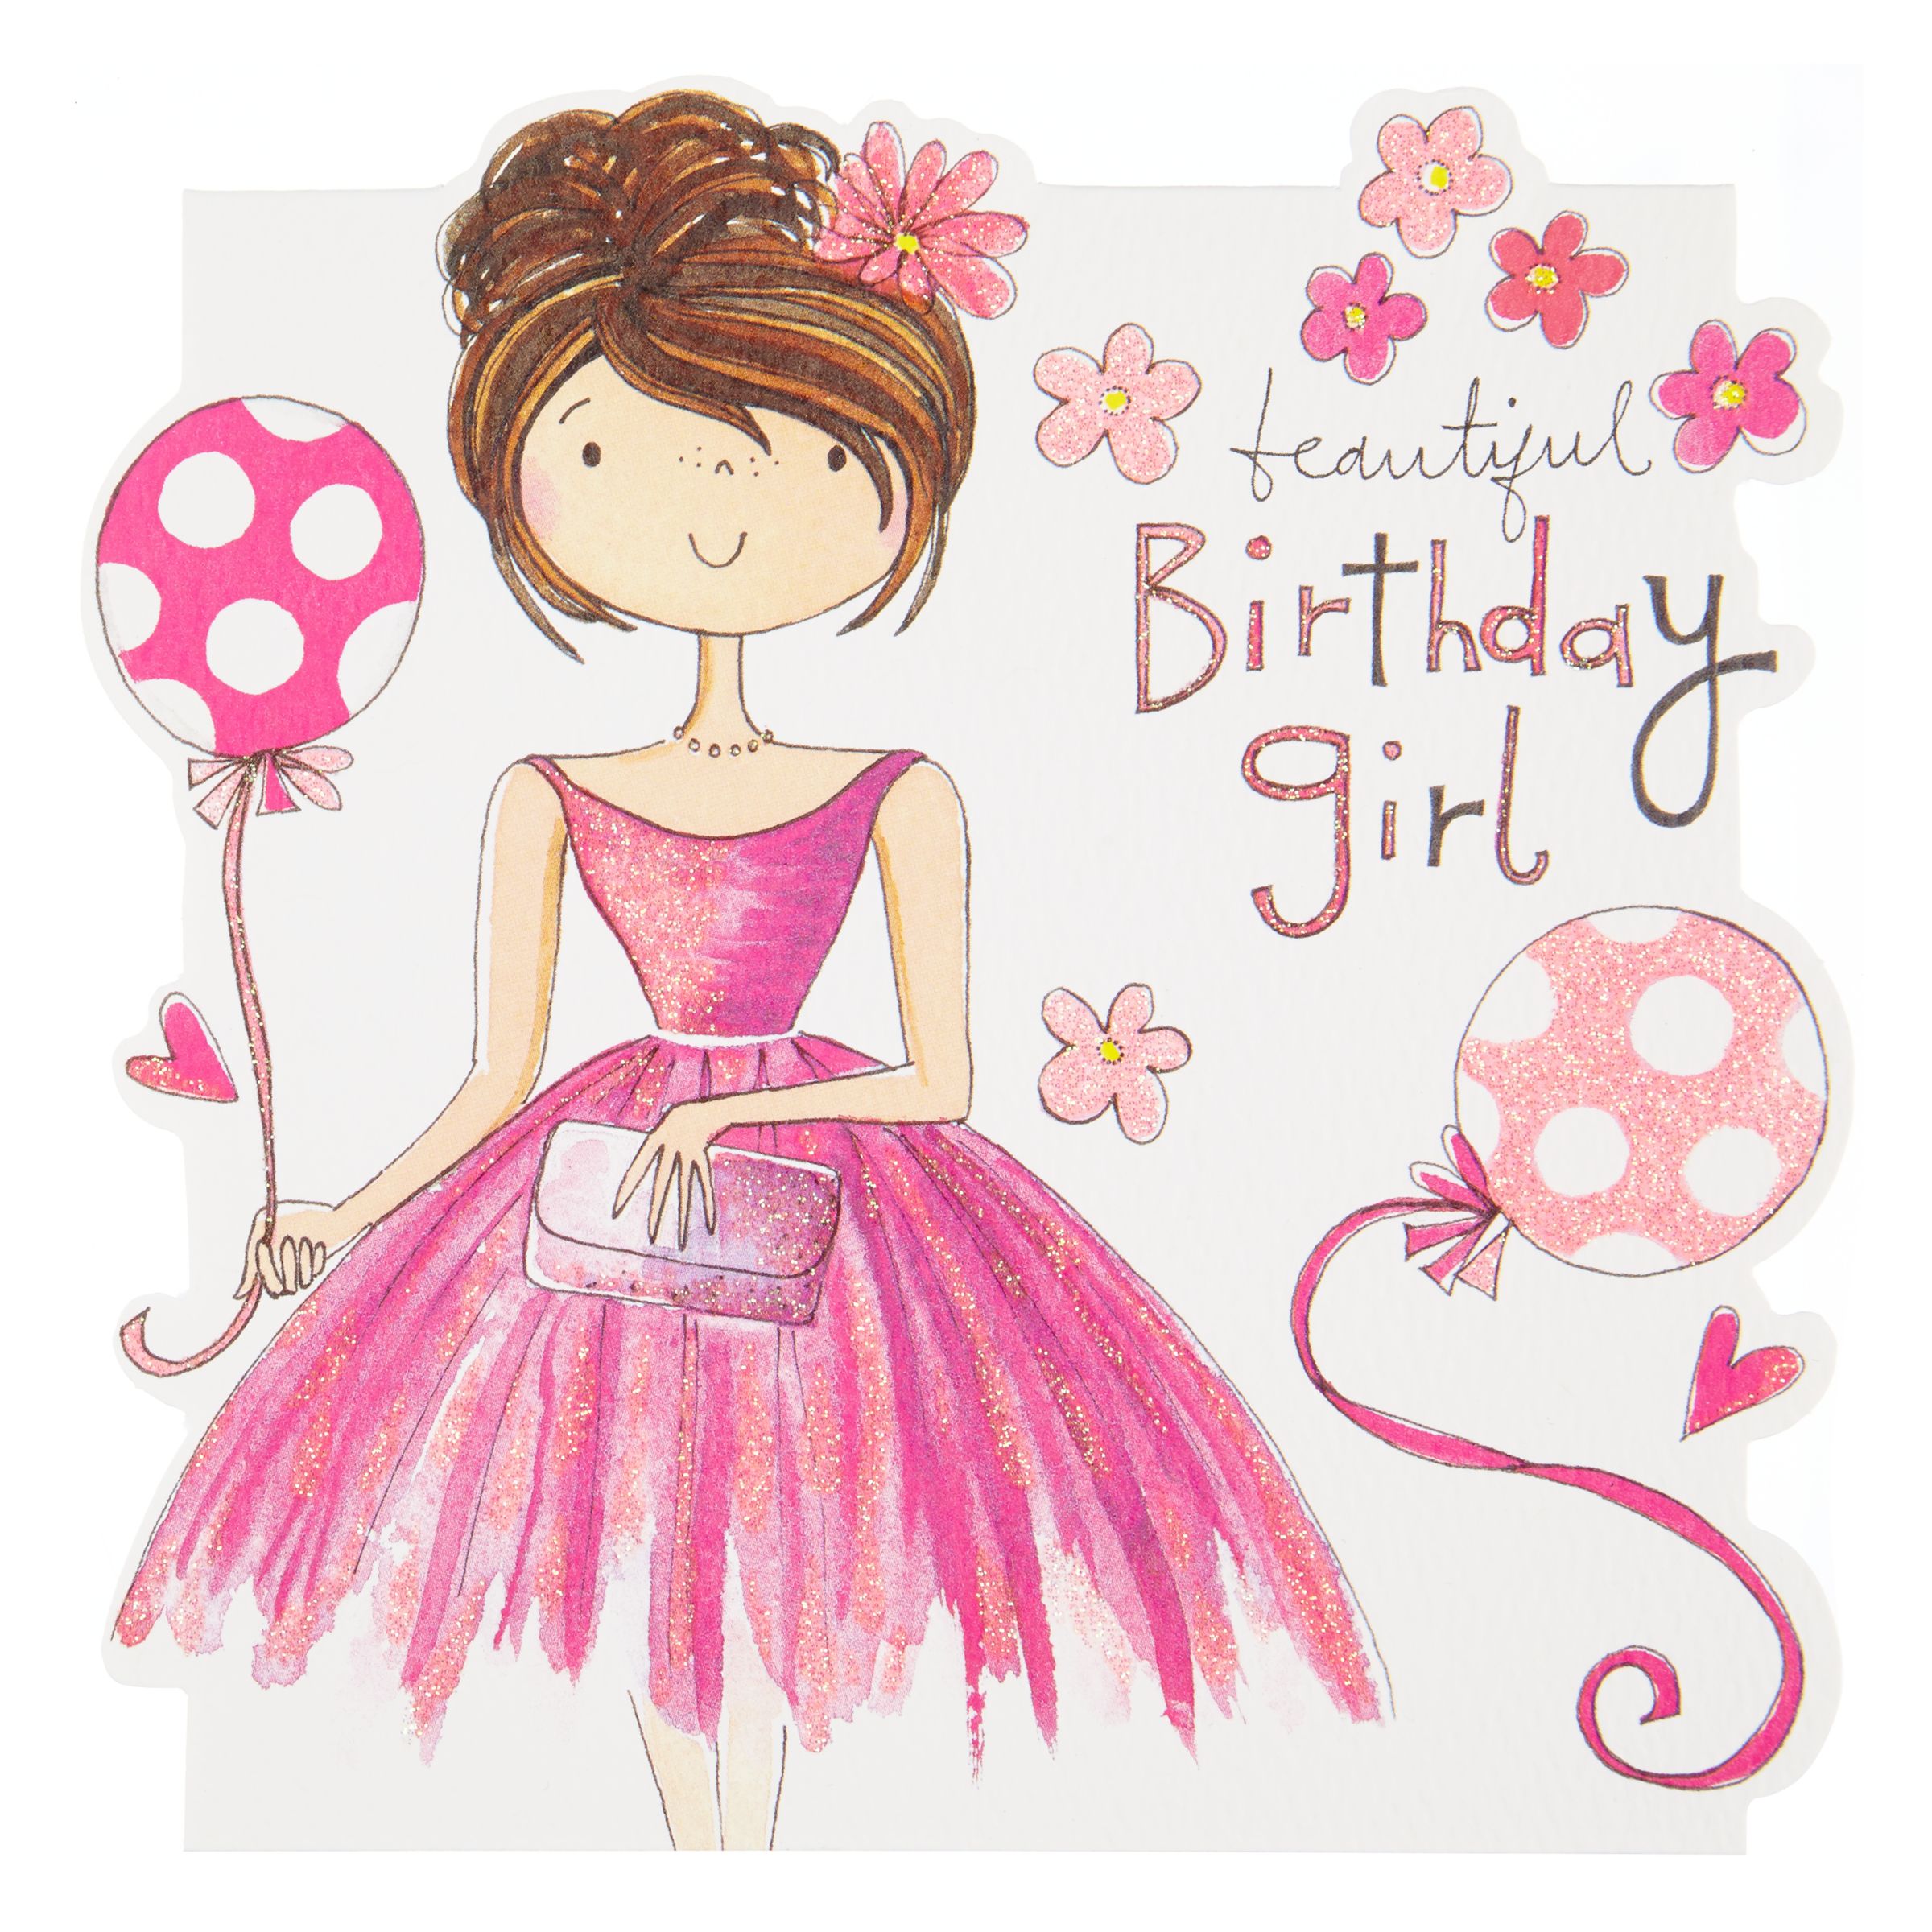 rachel-ellen-beautiful-girl-birthday-card-at-john-lewis-partners